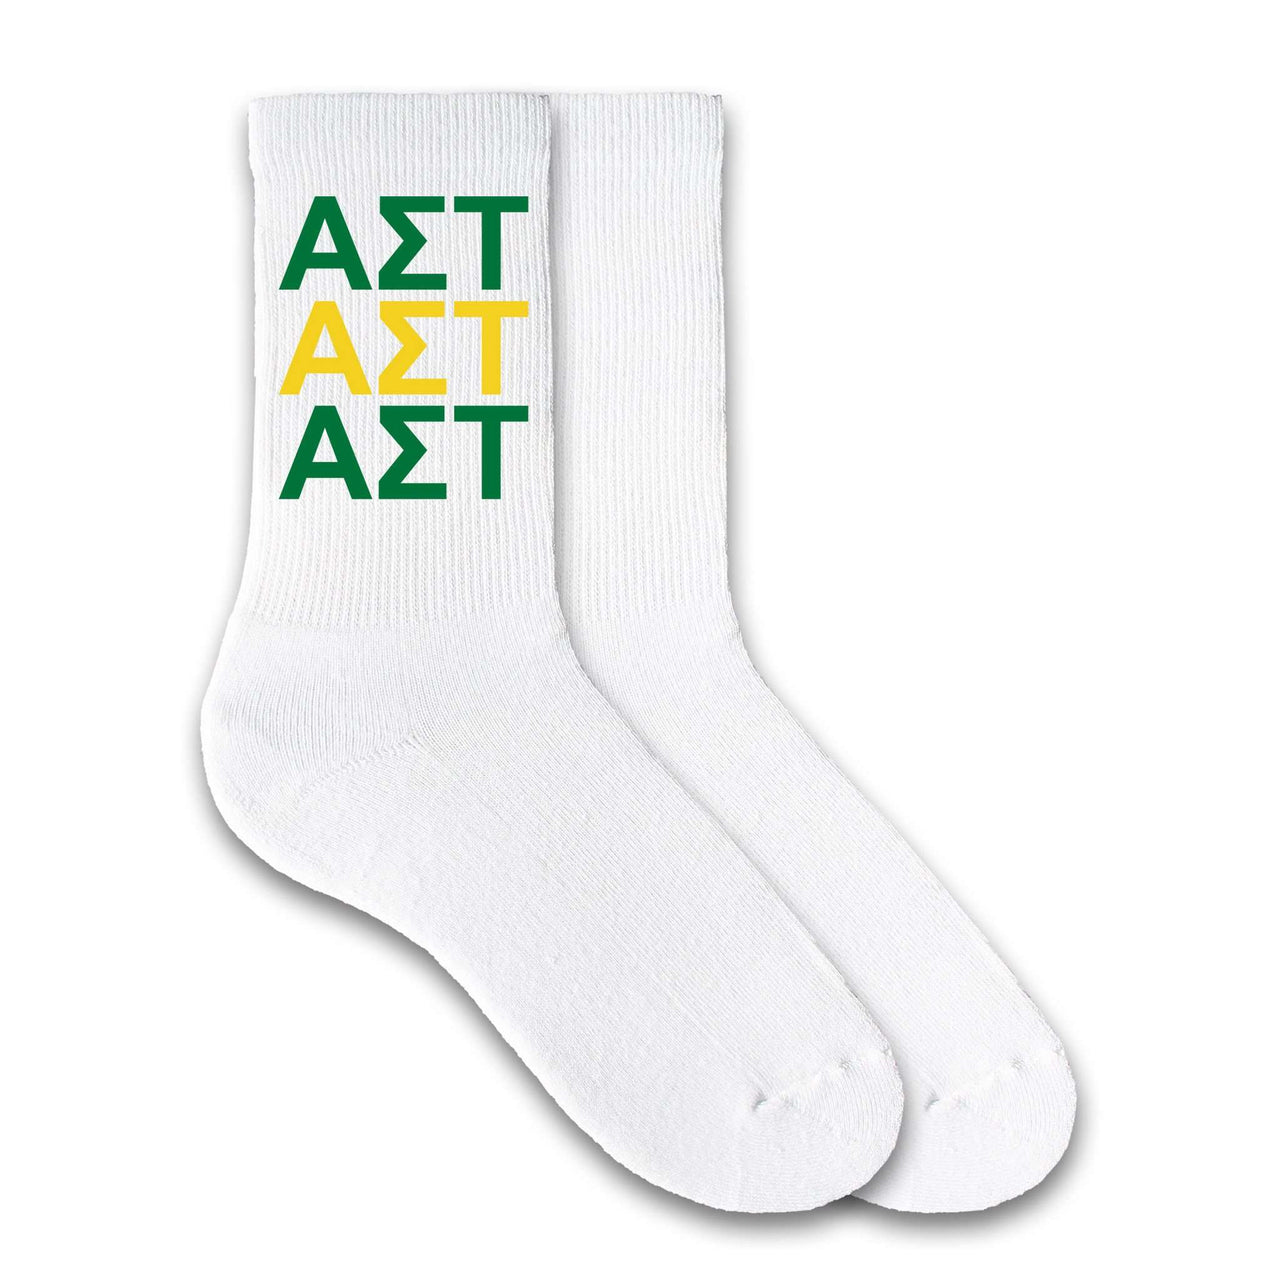 Alpha Sigma Tau sorority letters custom printed on white cotton crew socks